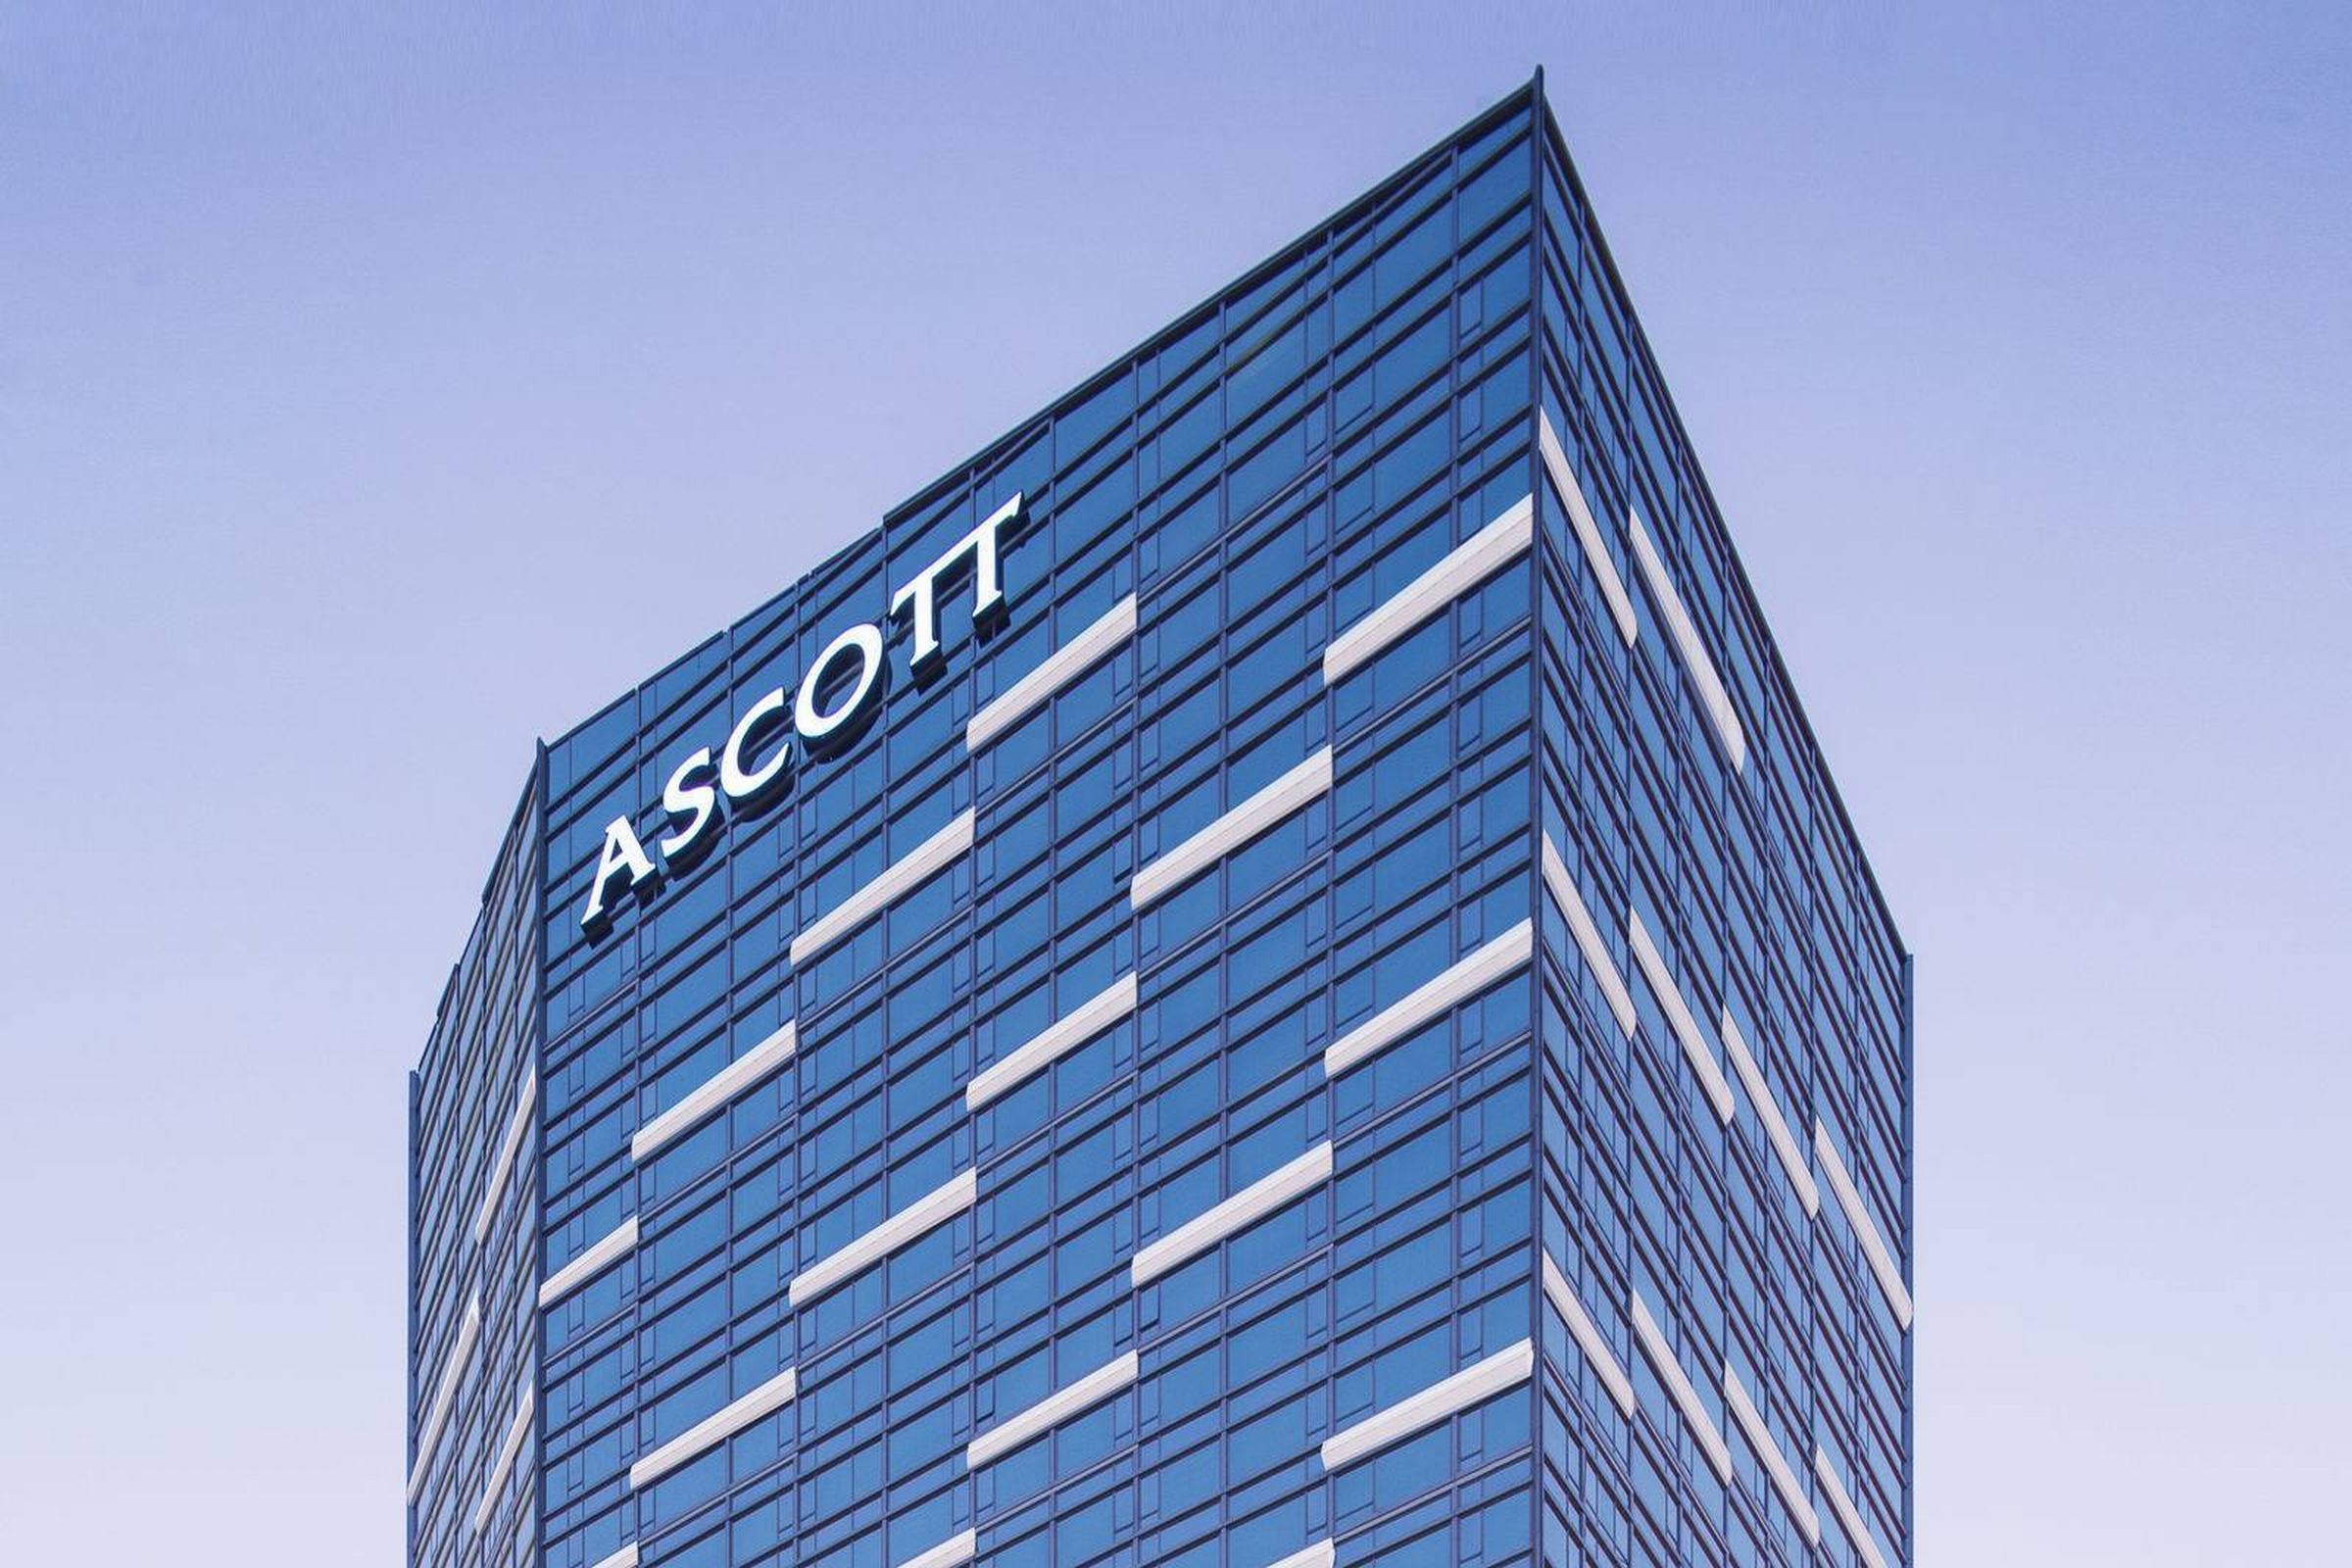 Ascott Macau